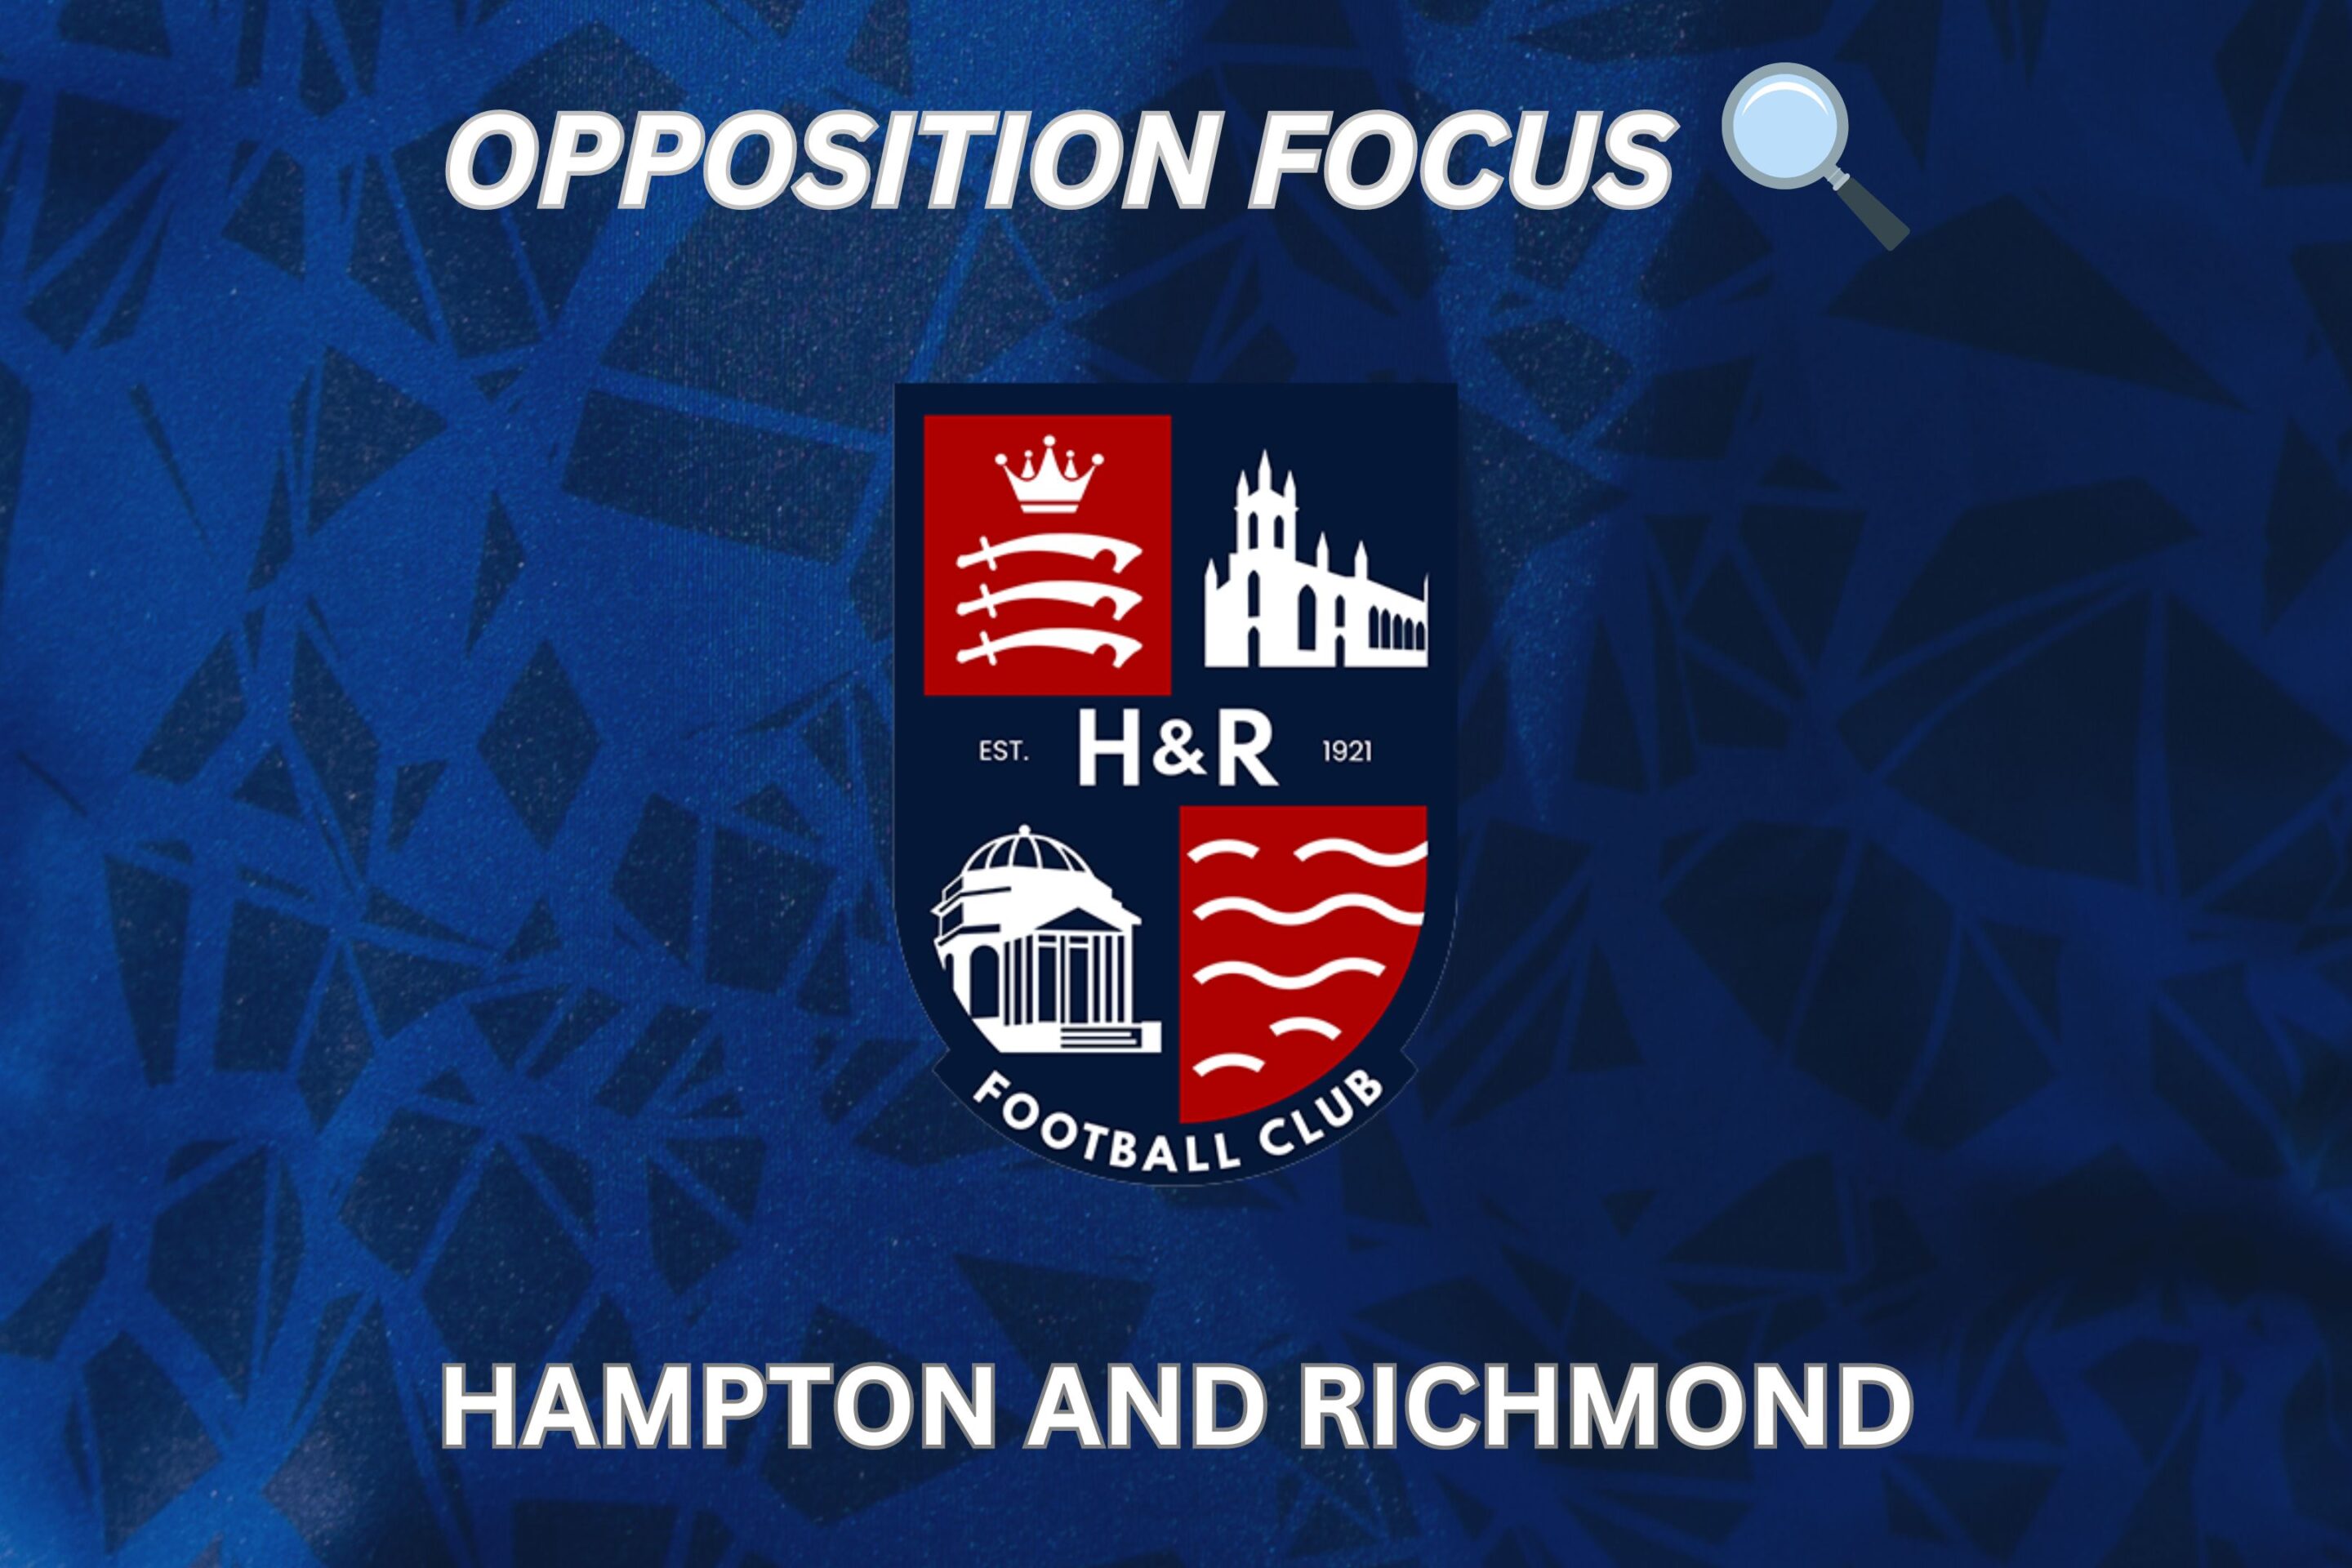 OPPOSITION FOCUS: HAMPTON AND RICHMOND